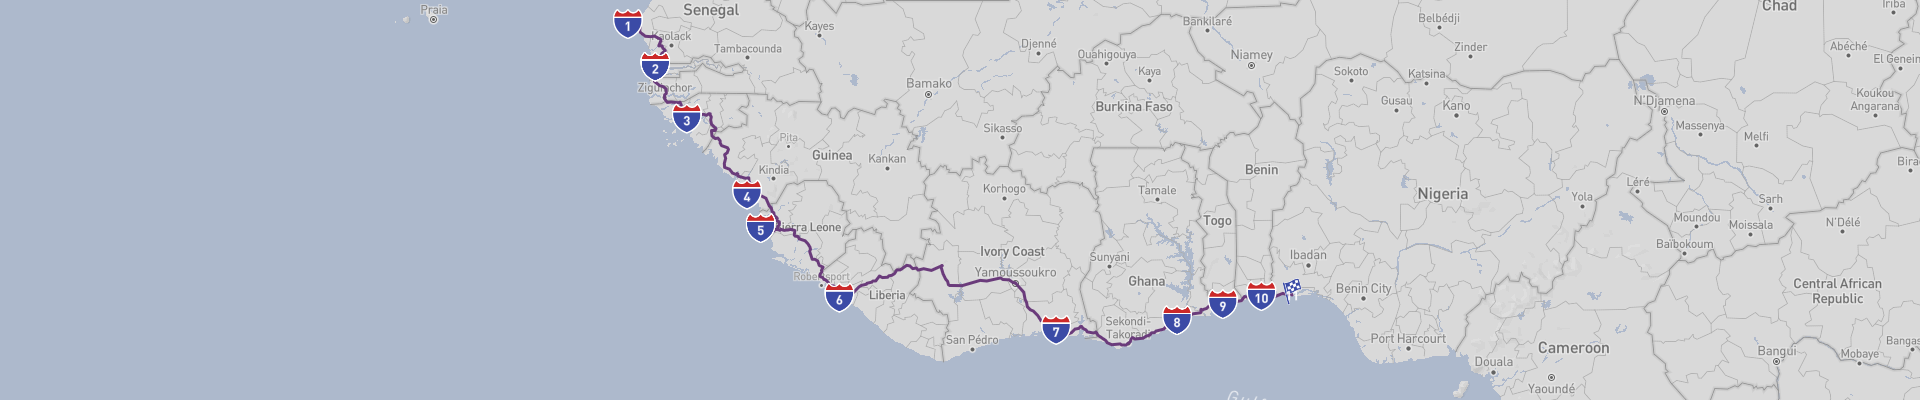 Voyage en voiture transafricain de Dakar à Lagos